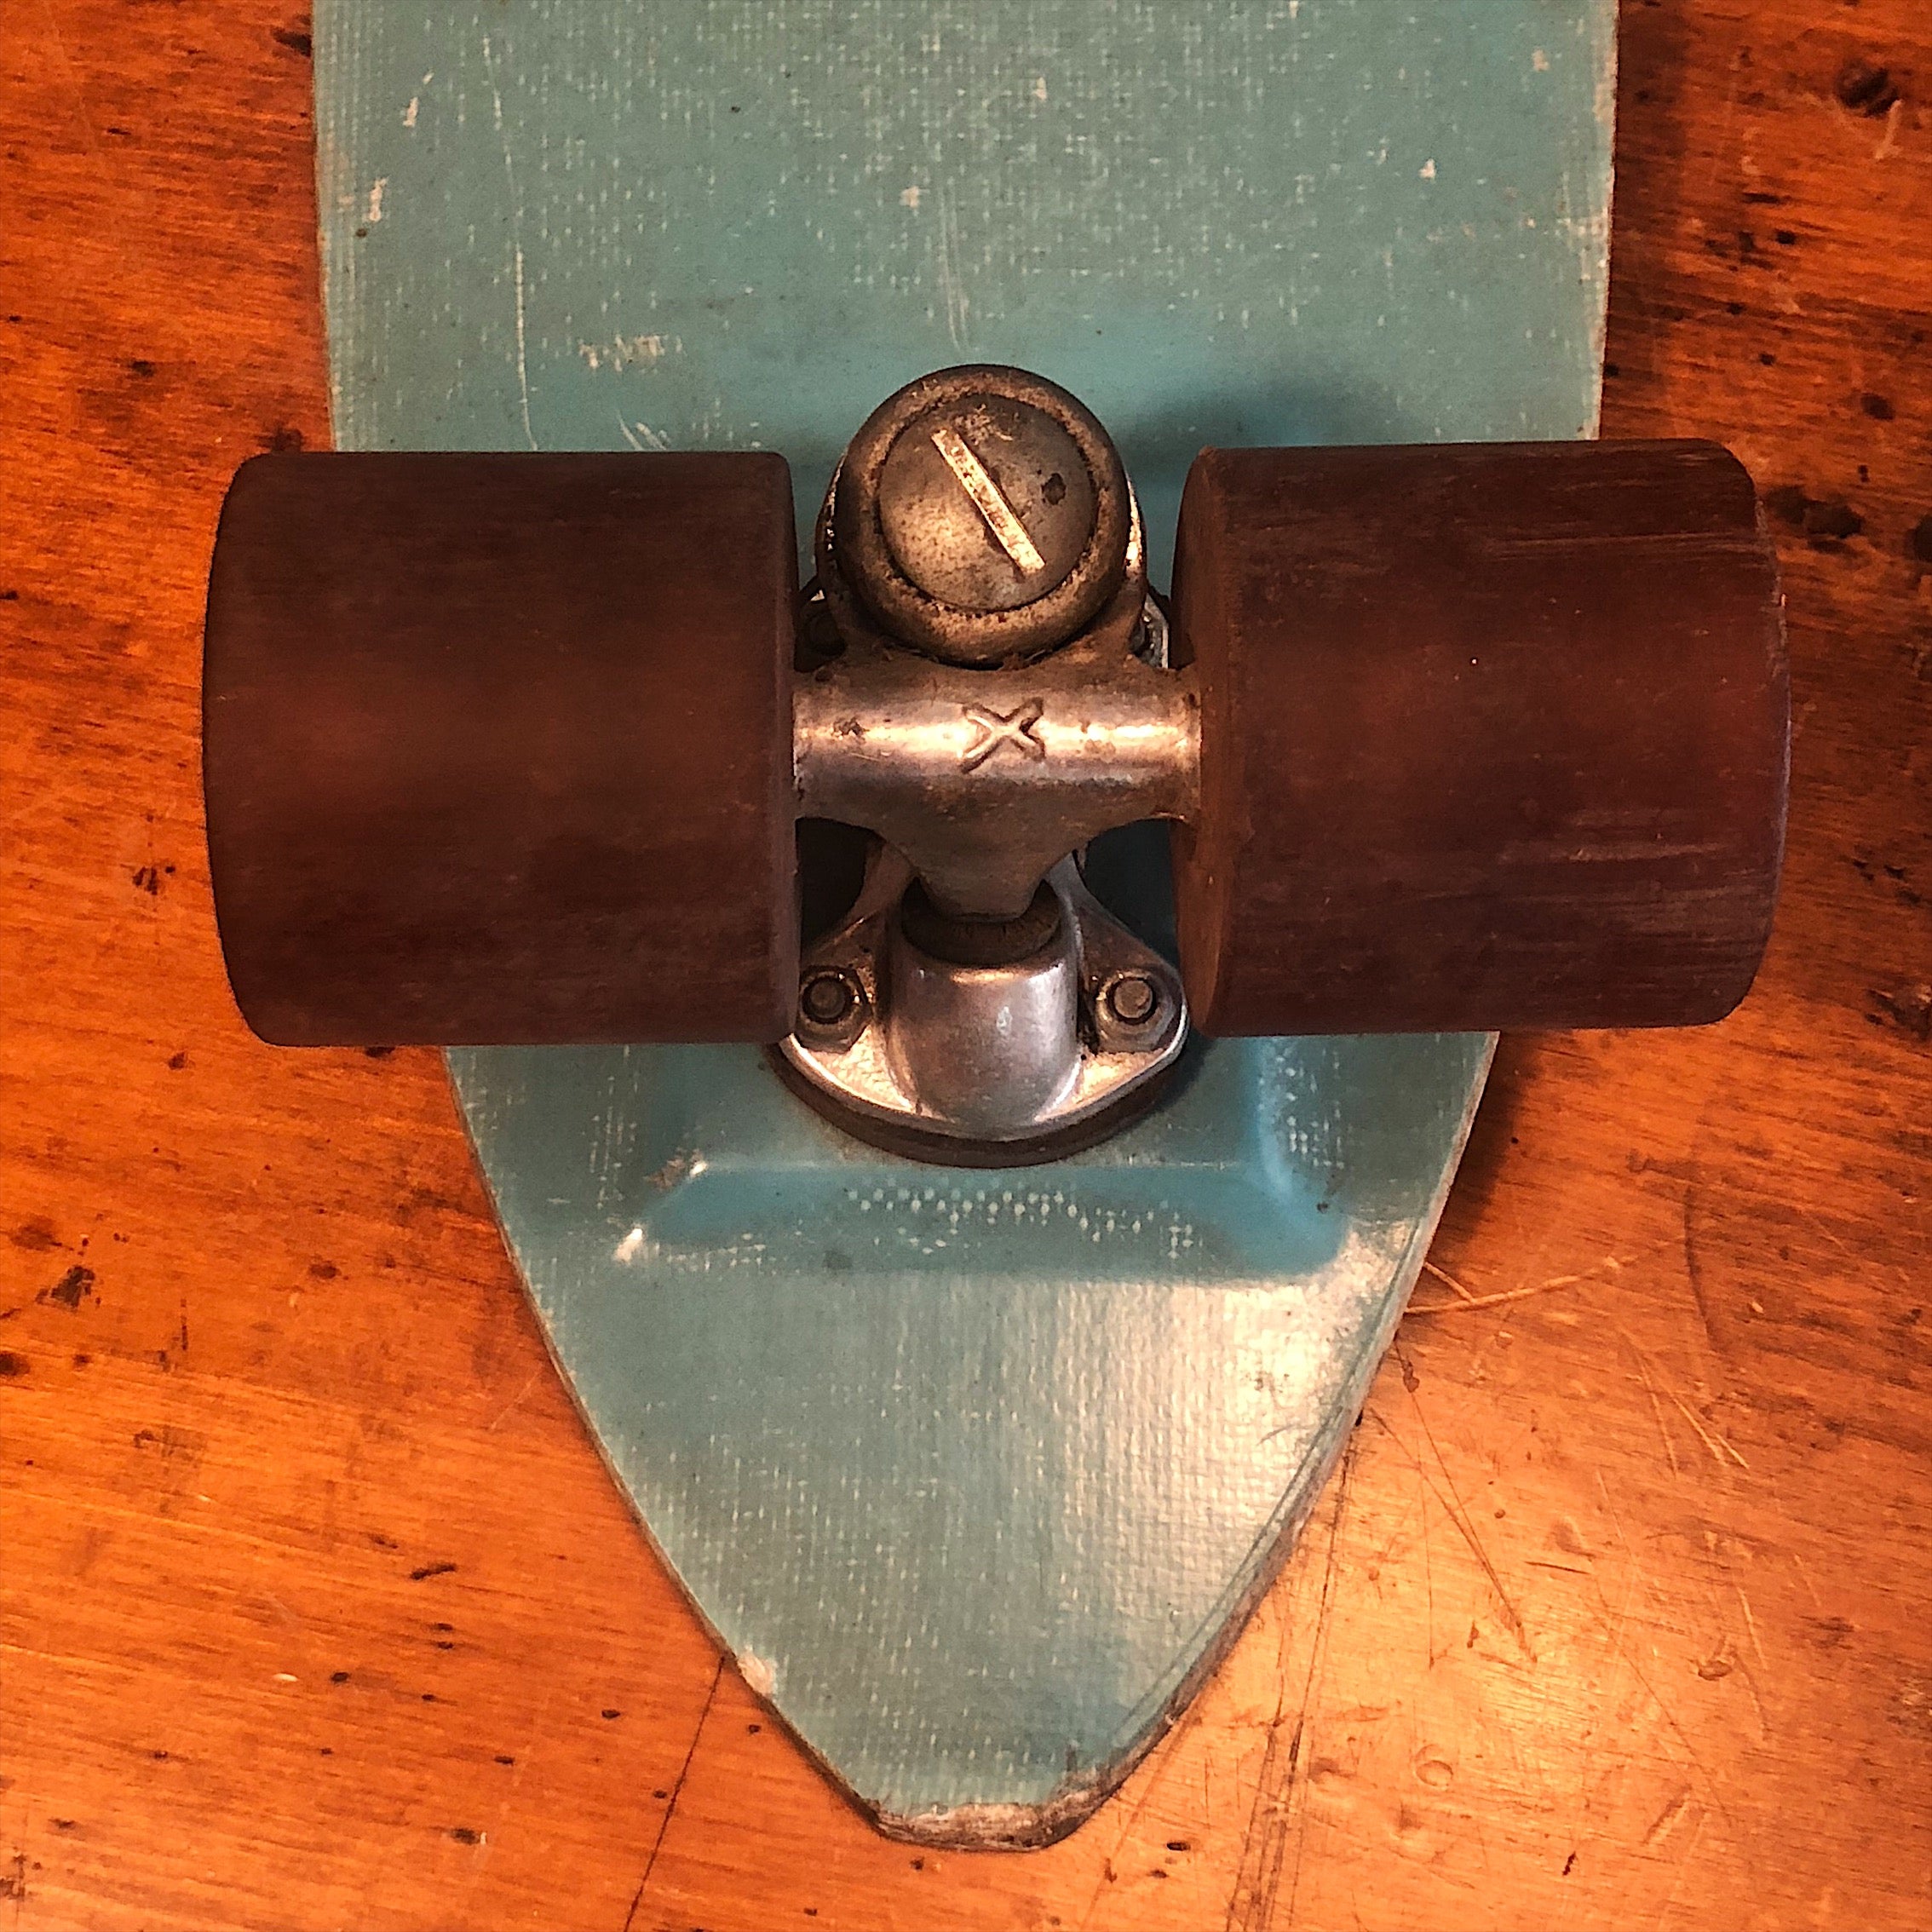 Wheels from vintage California skateboard